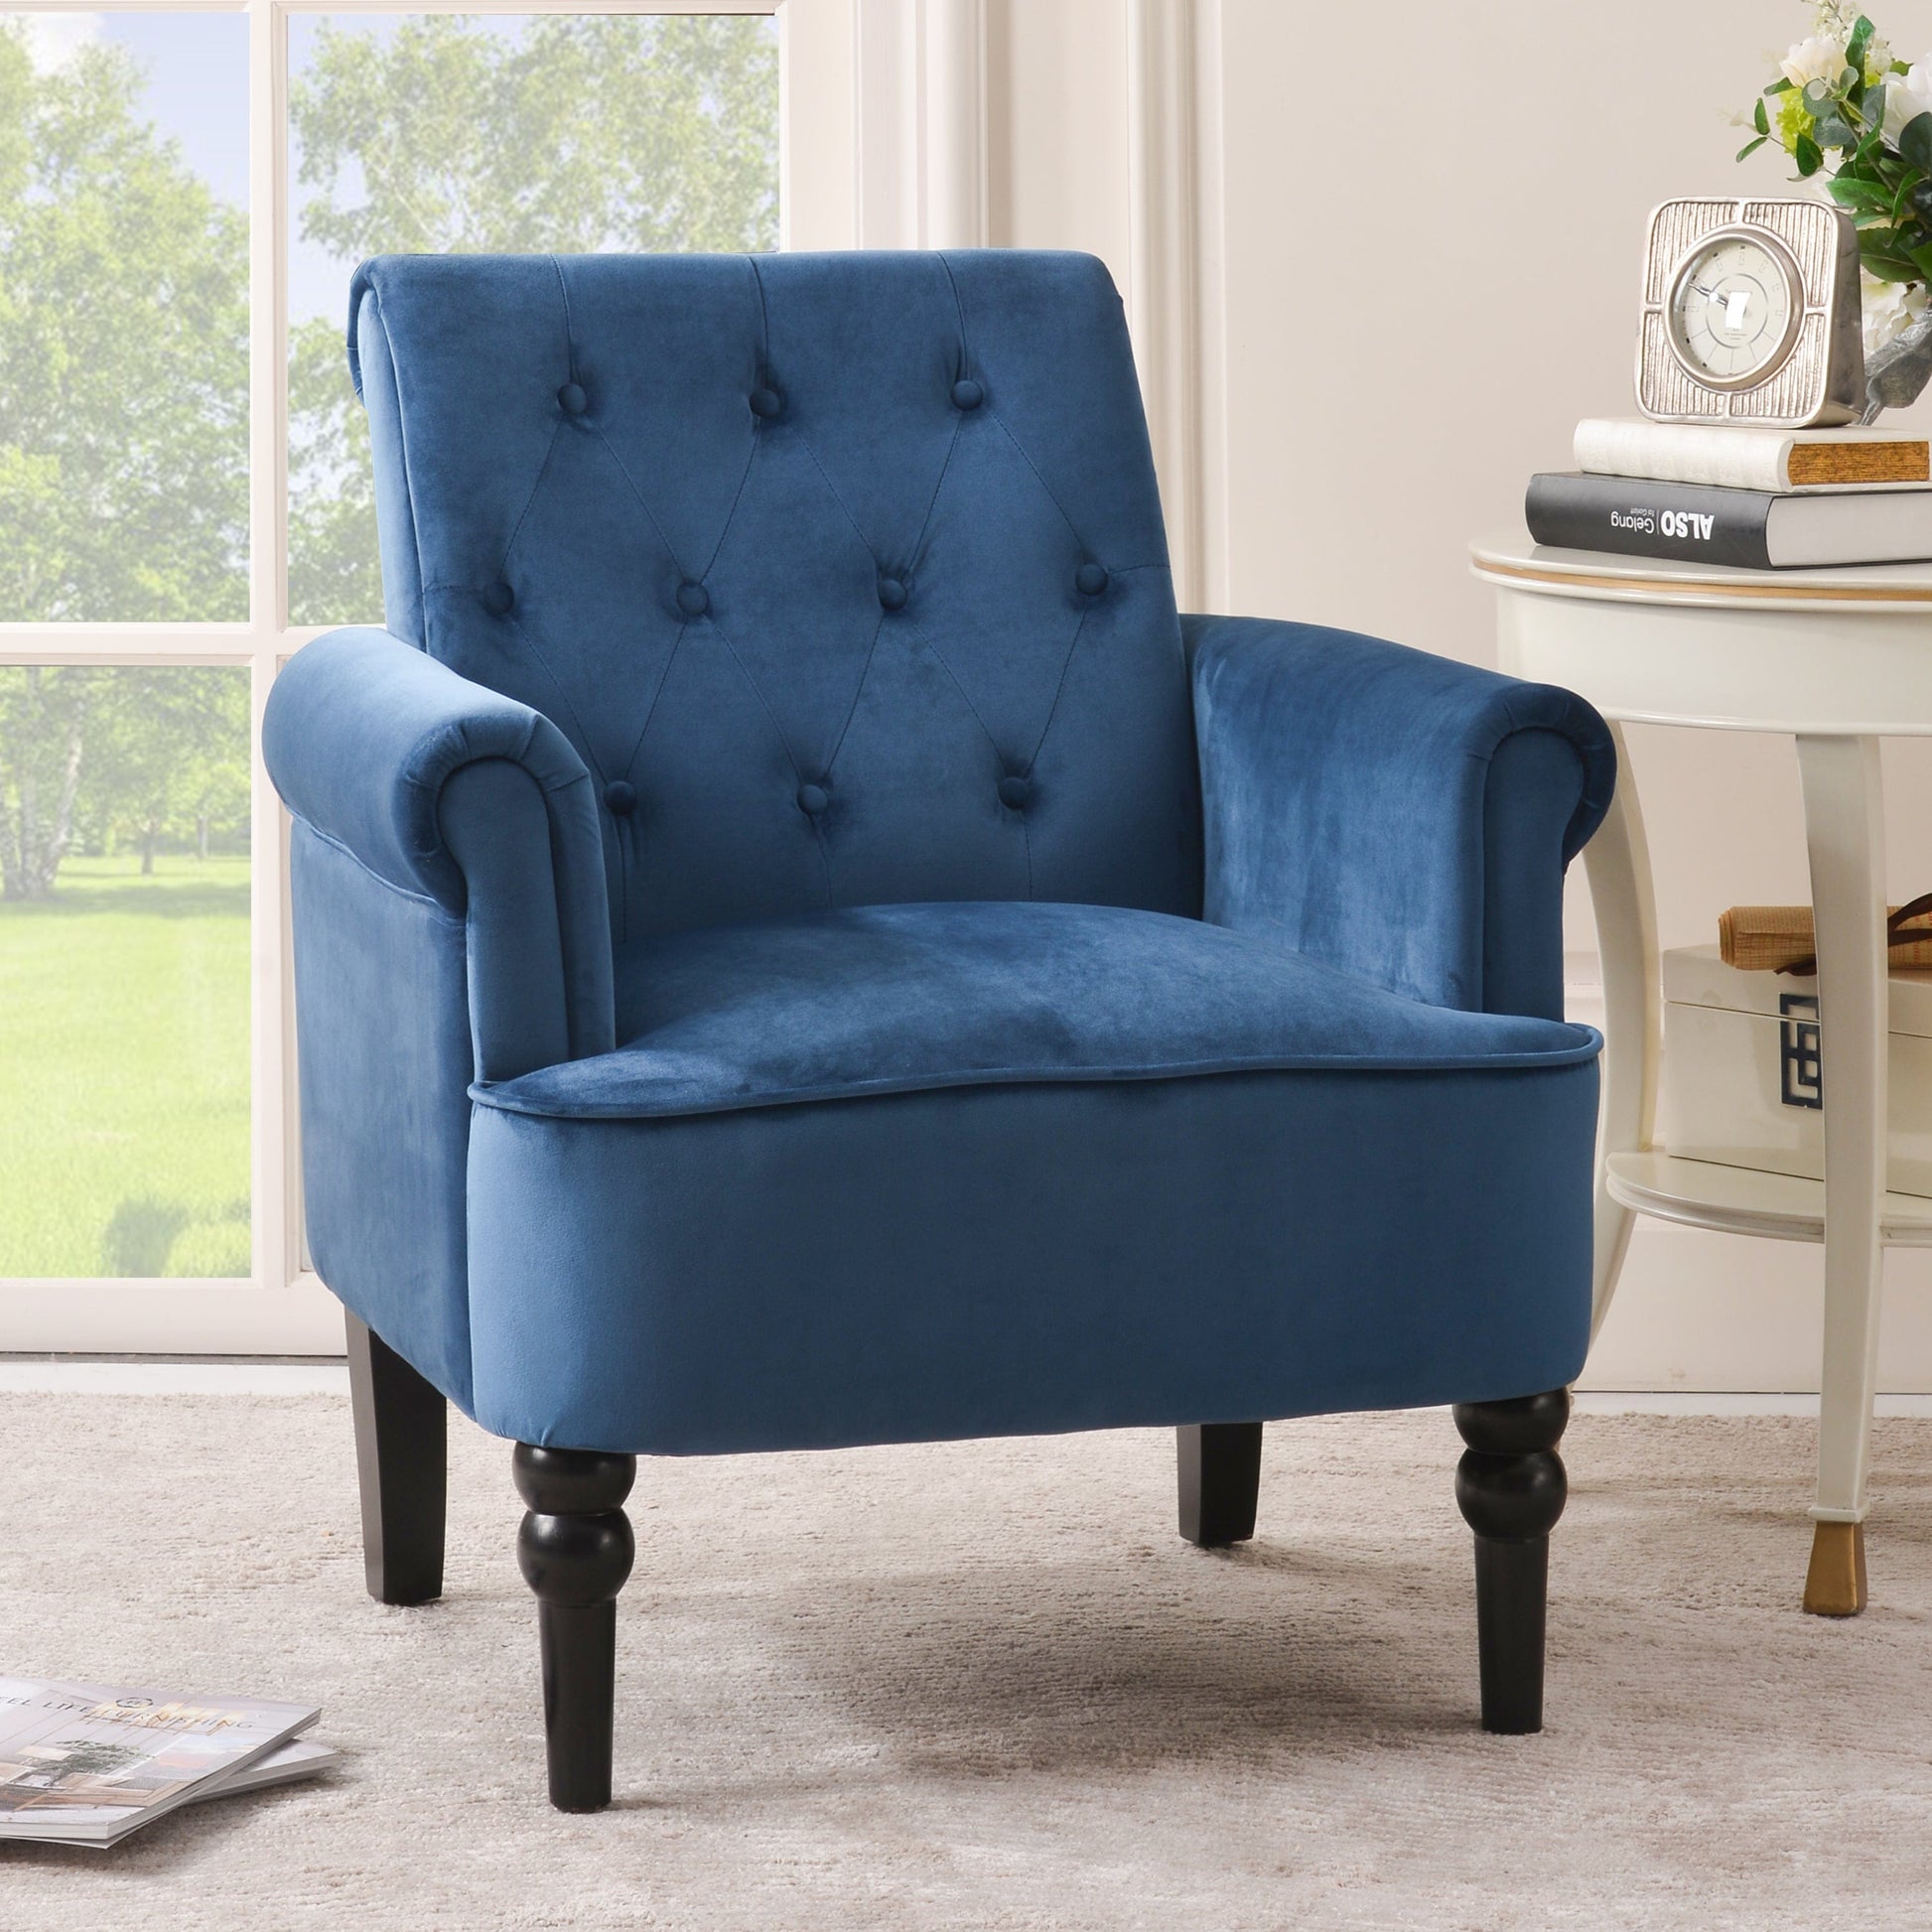 1st Choice Furniture Direct Arm Chair Cushions 1st Choice Navy Blue Button Tufted Club Chair with Wooden Legs